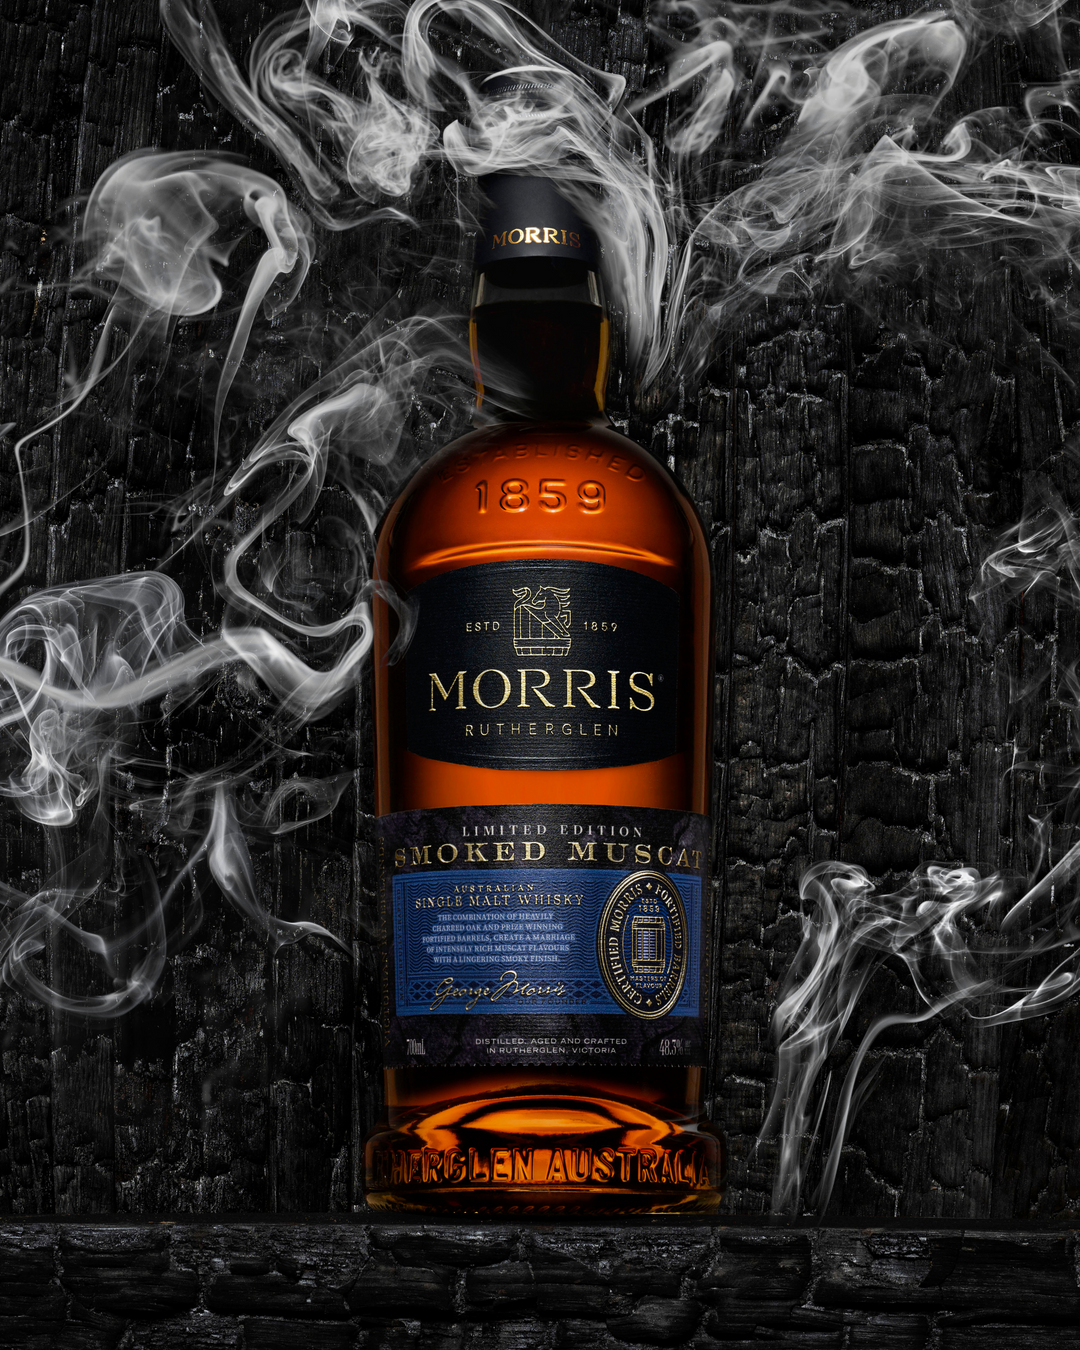 MORRIS Australian Single Malt Whisky SMOKED MUSCAT BARREL